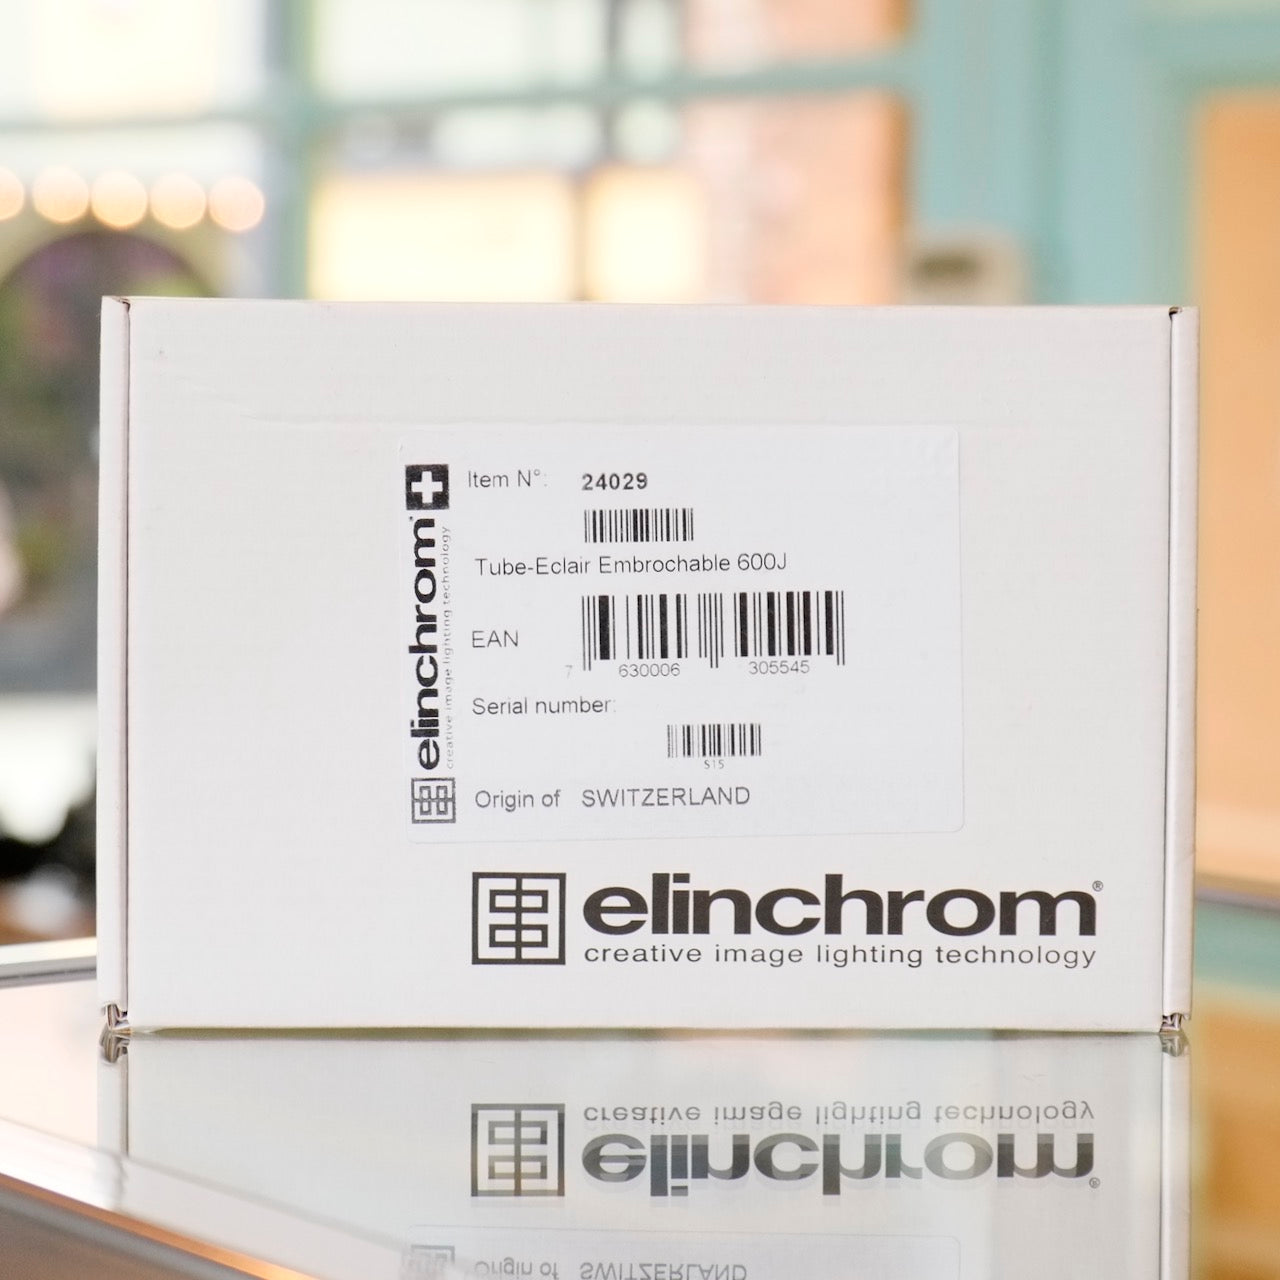 Elinchrom 24029 flashtube for Compact & Style series strobes